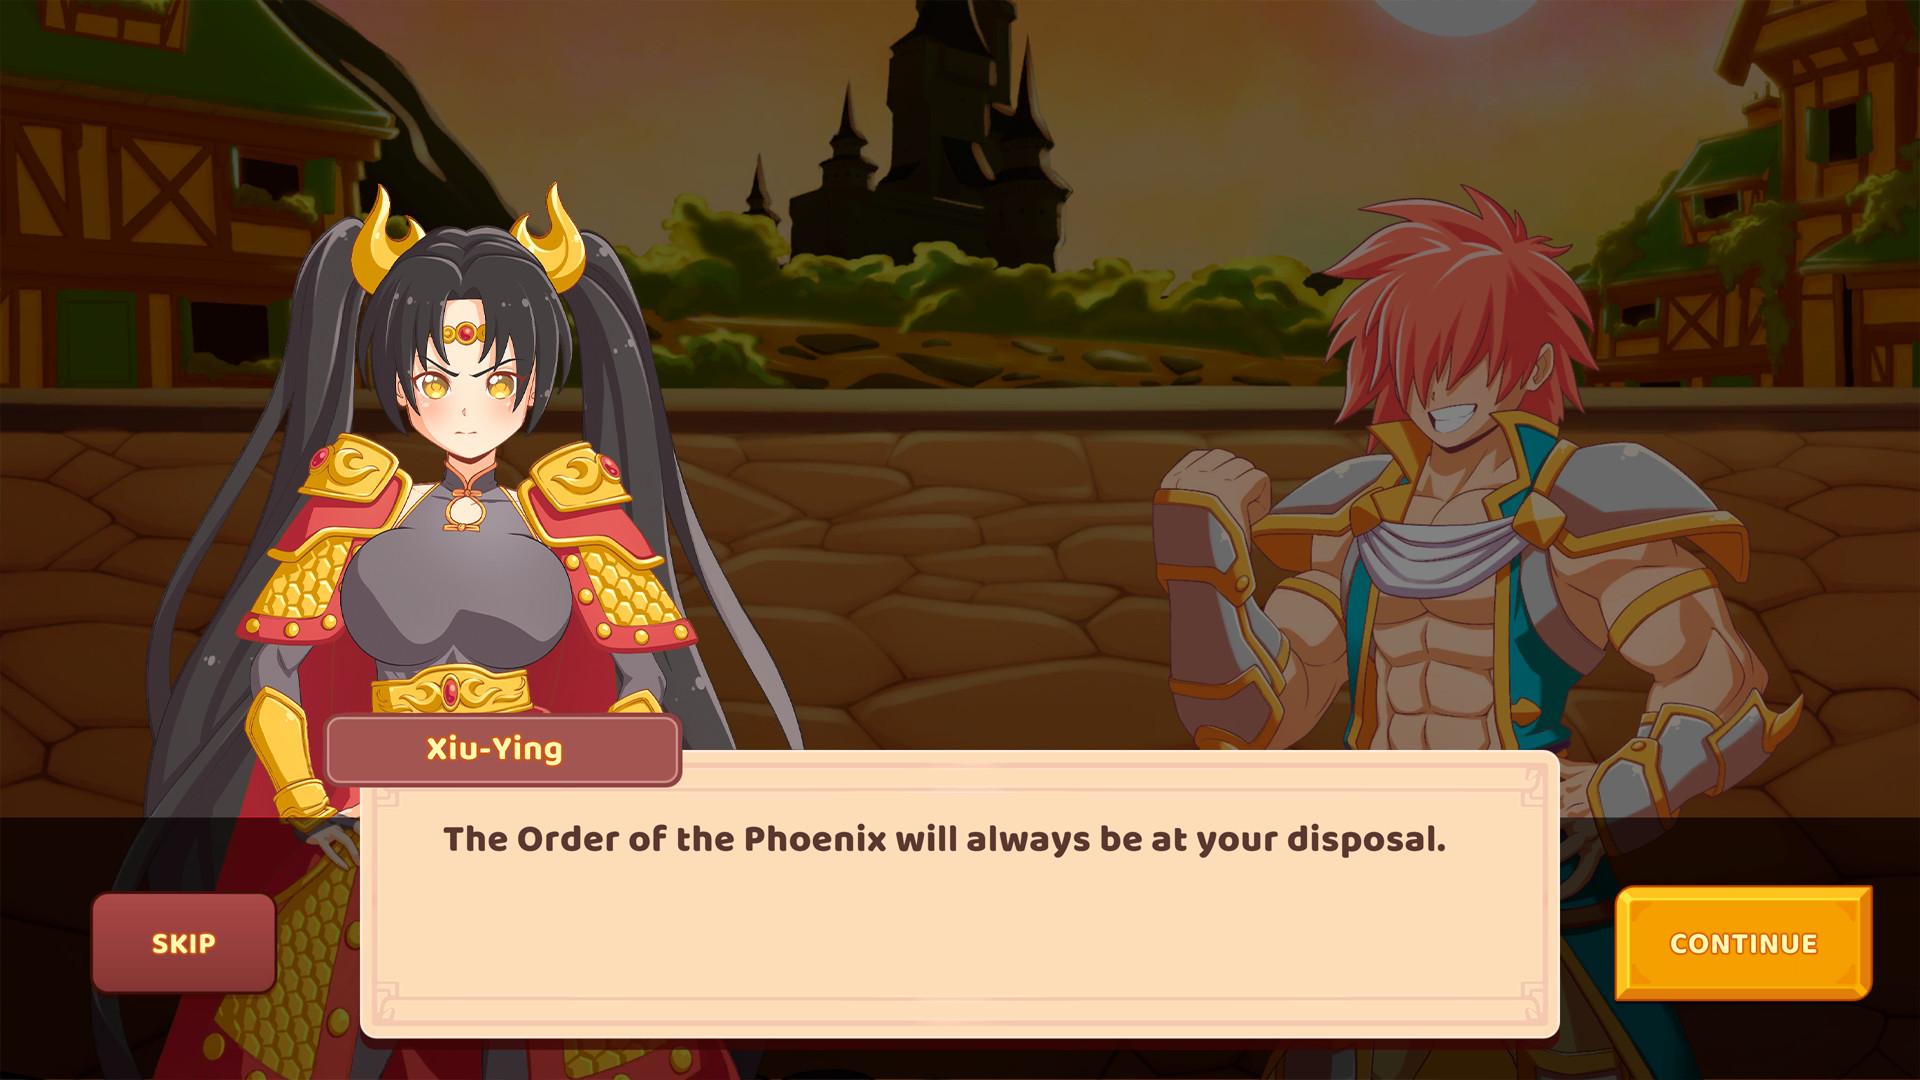 Screenshot №3 from game Eros Fantasy